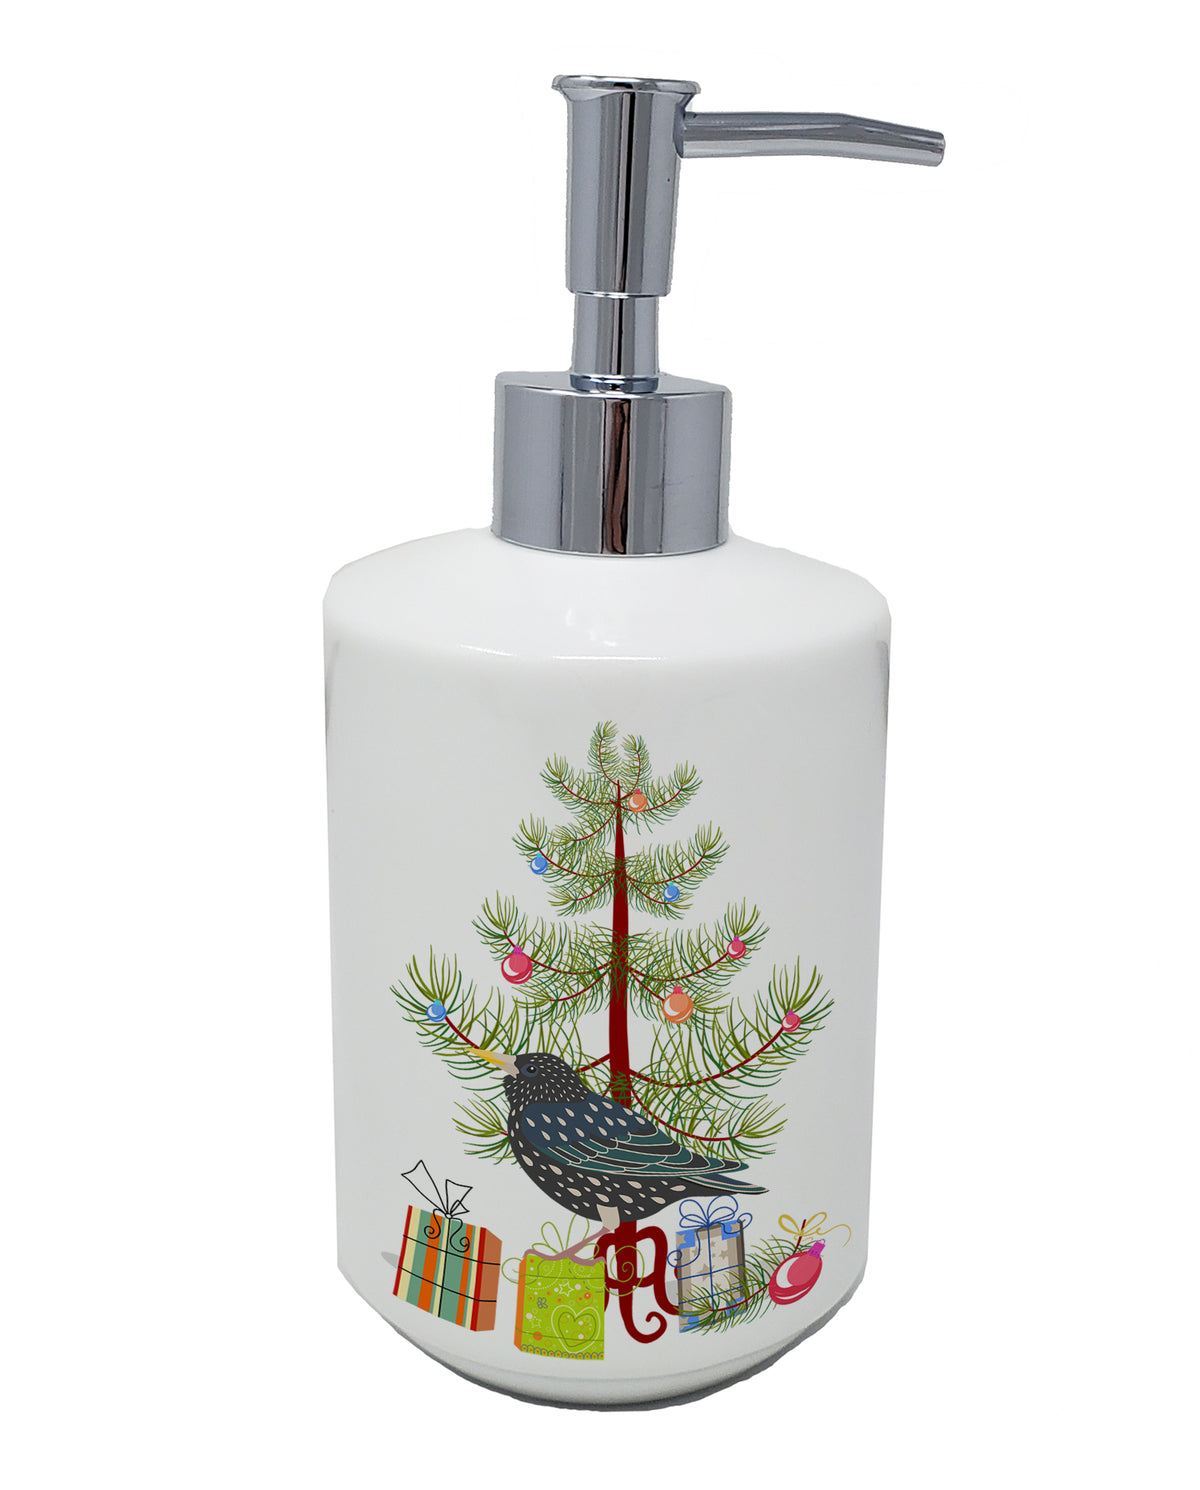 Buy this Starling Merry Christmas Ceramic Soap Dispenser